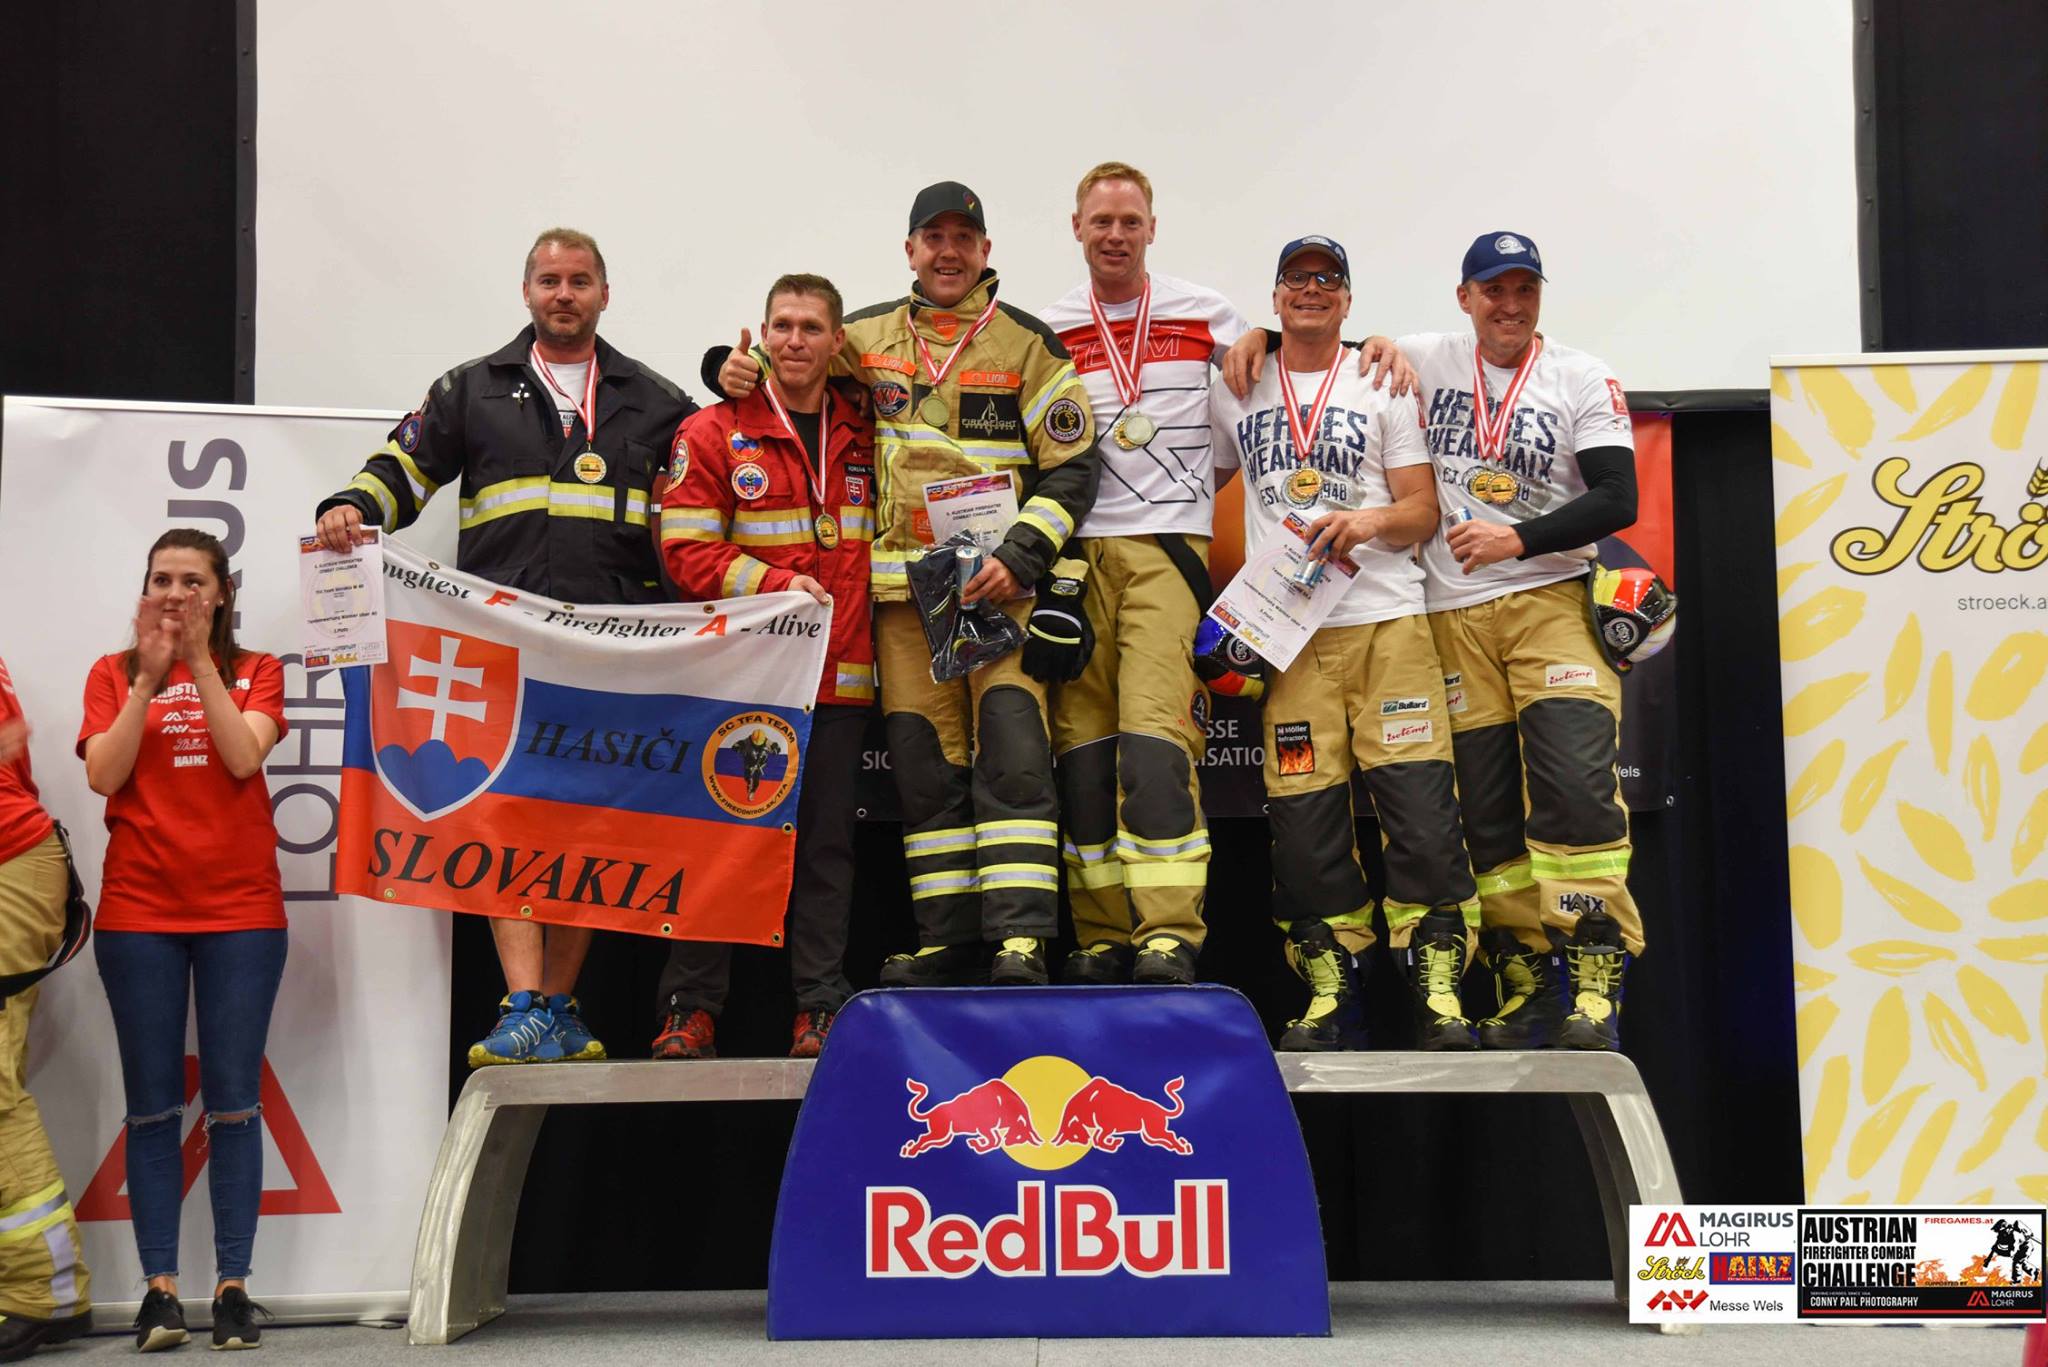 10 - Austrian and International Firefighter Combat Challenge